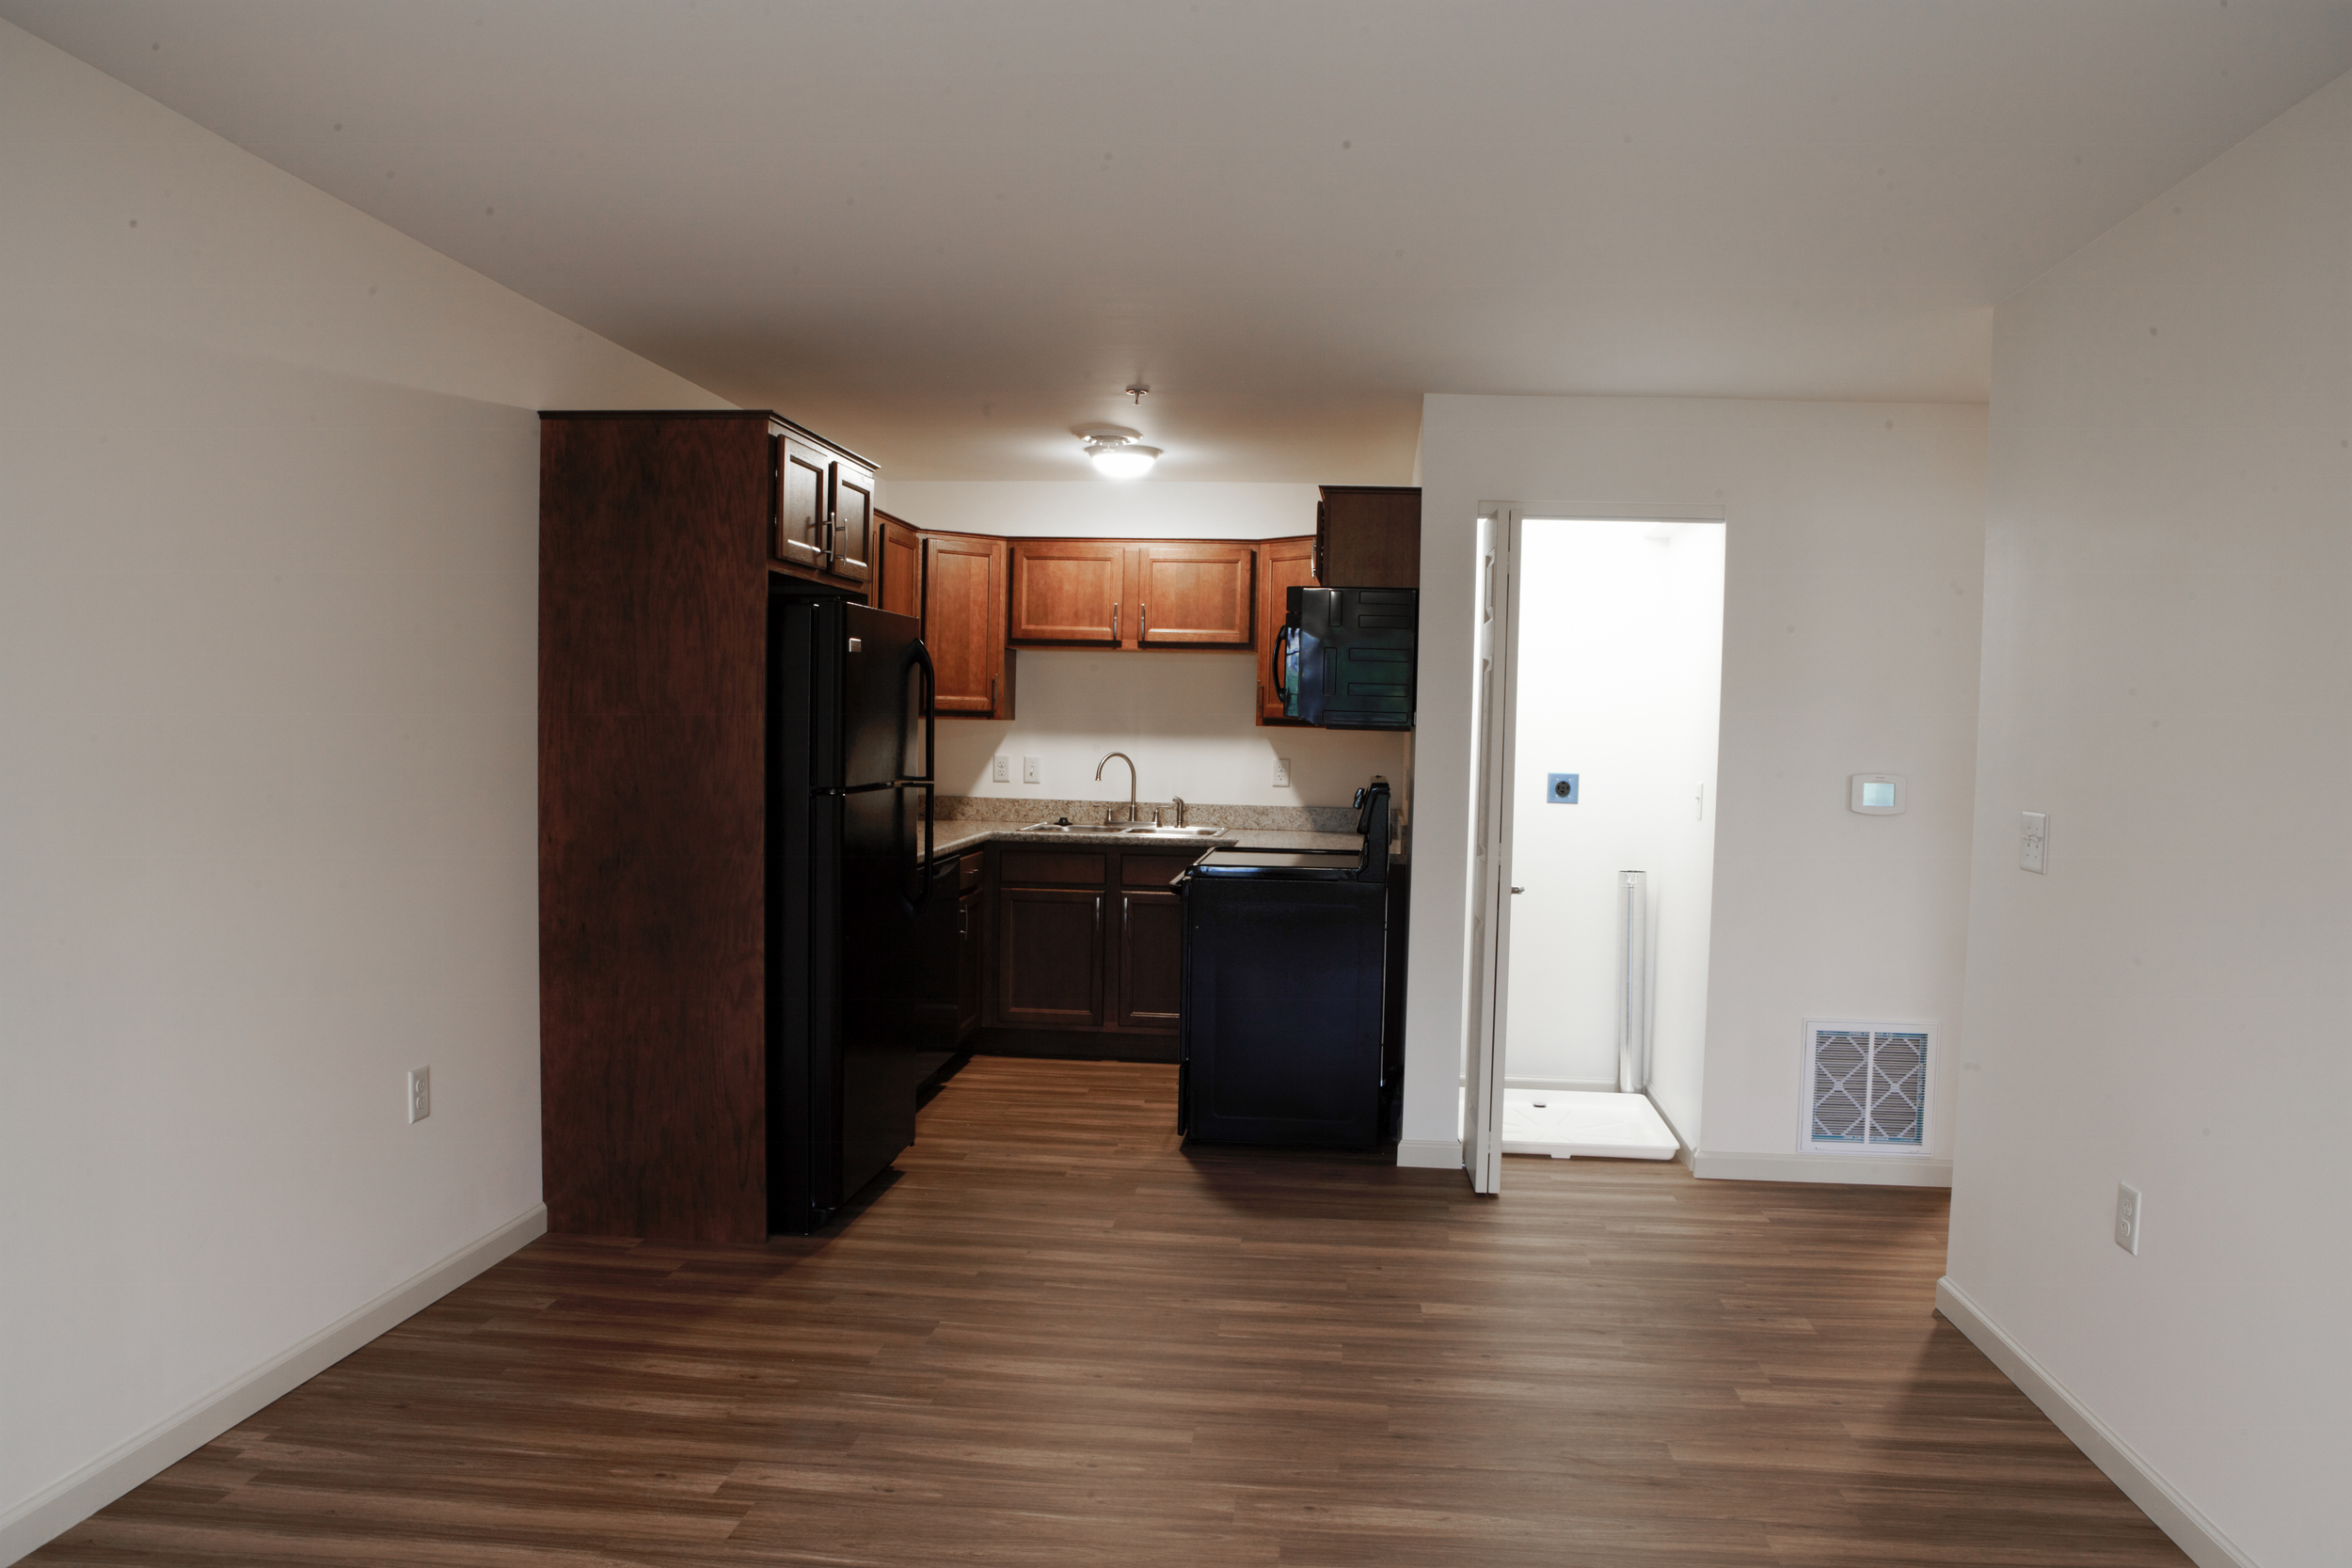 1 Bedroom: Living/Dining Room + Kitchen